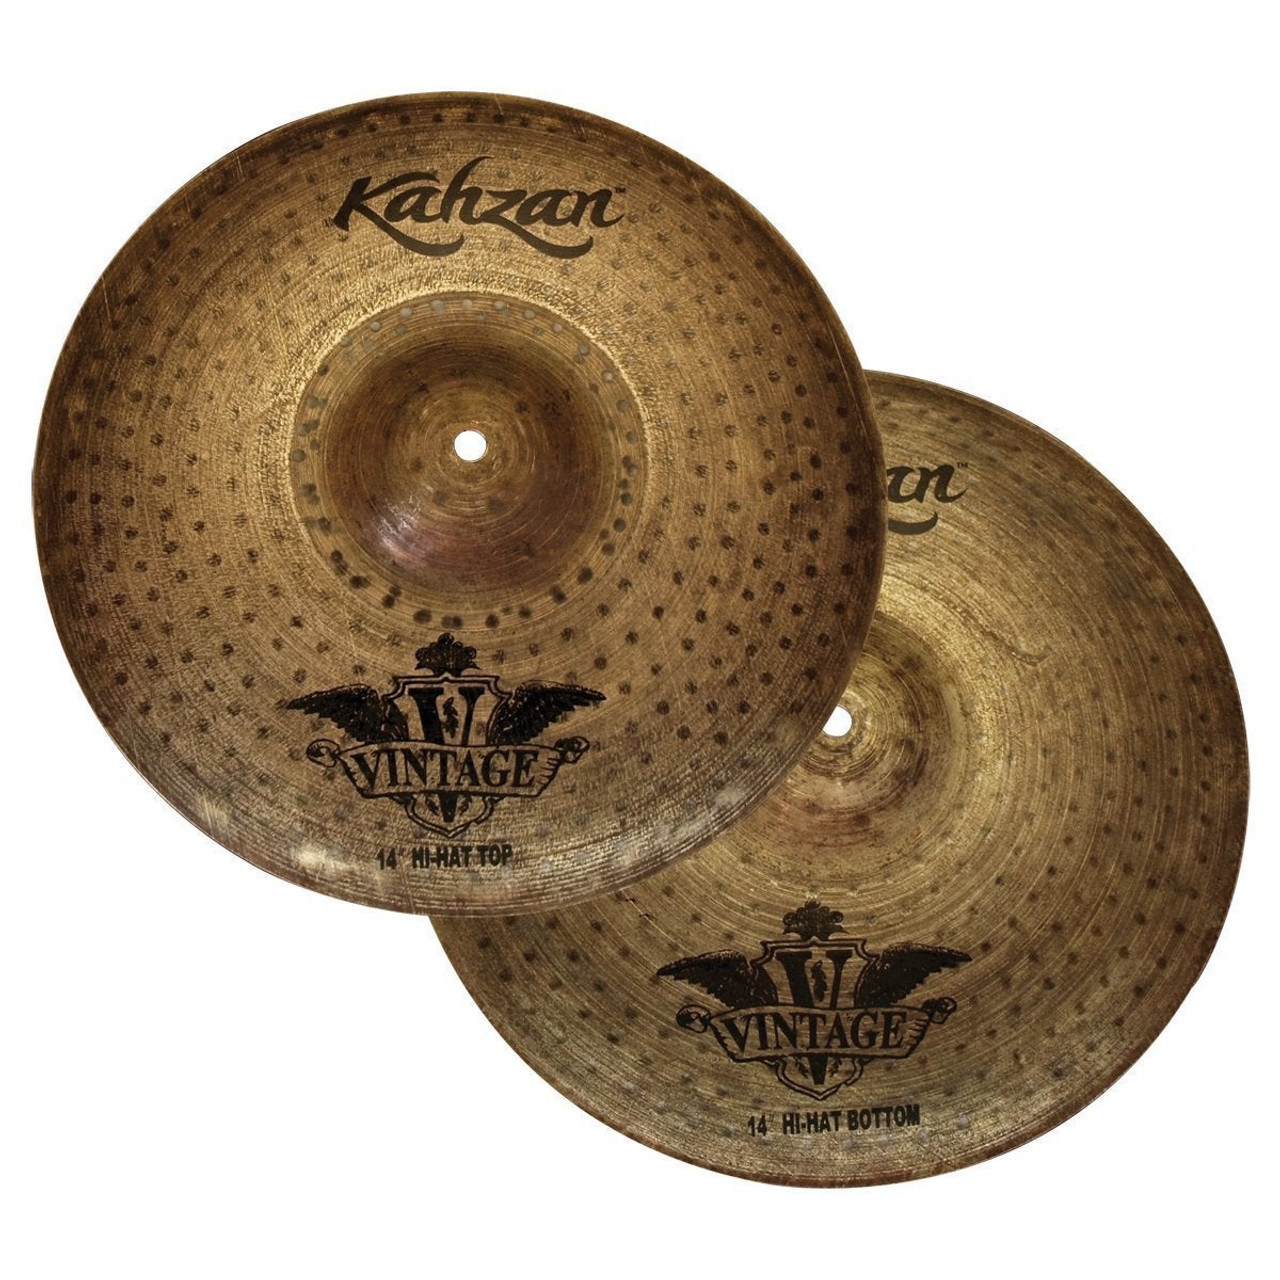 Kahzan 'Vintage Series' Rock Hi-Hat Cymbals (14")